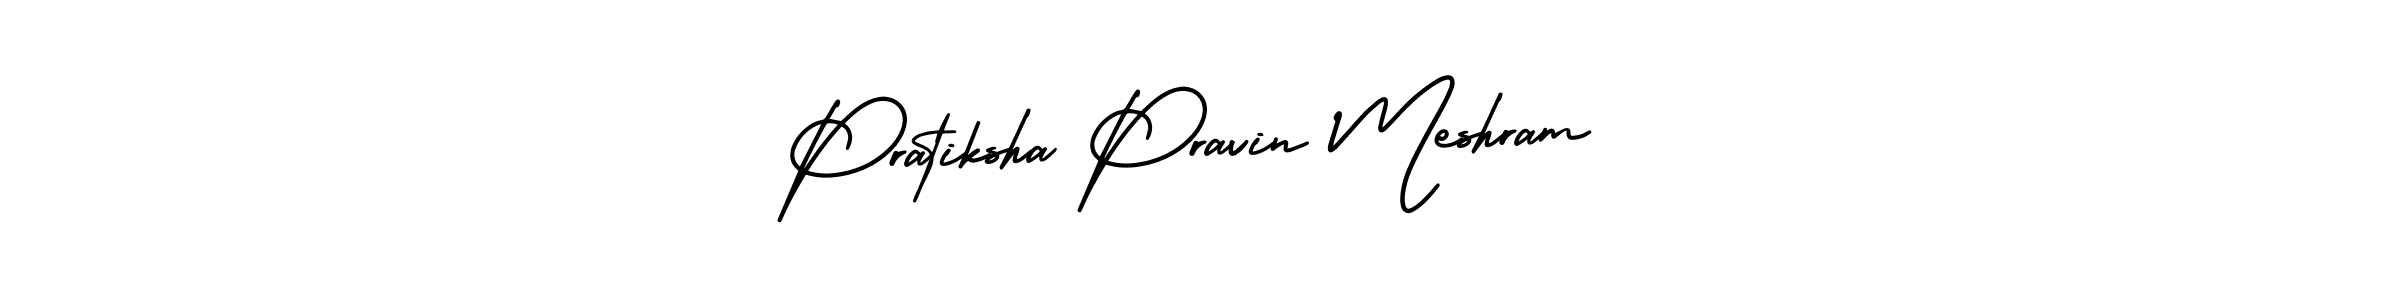 Best and Professional Signature Style for Pratiksha Pravin Meshram. AmerikaSignatureDemo-Regular Best Signature Style Collection. Pratiksha Pravin Meshram signature style 3 images and pictures png